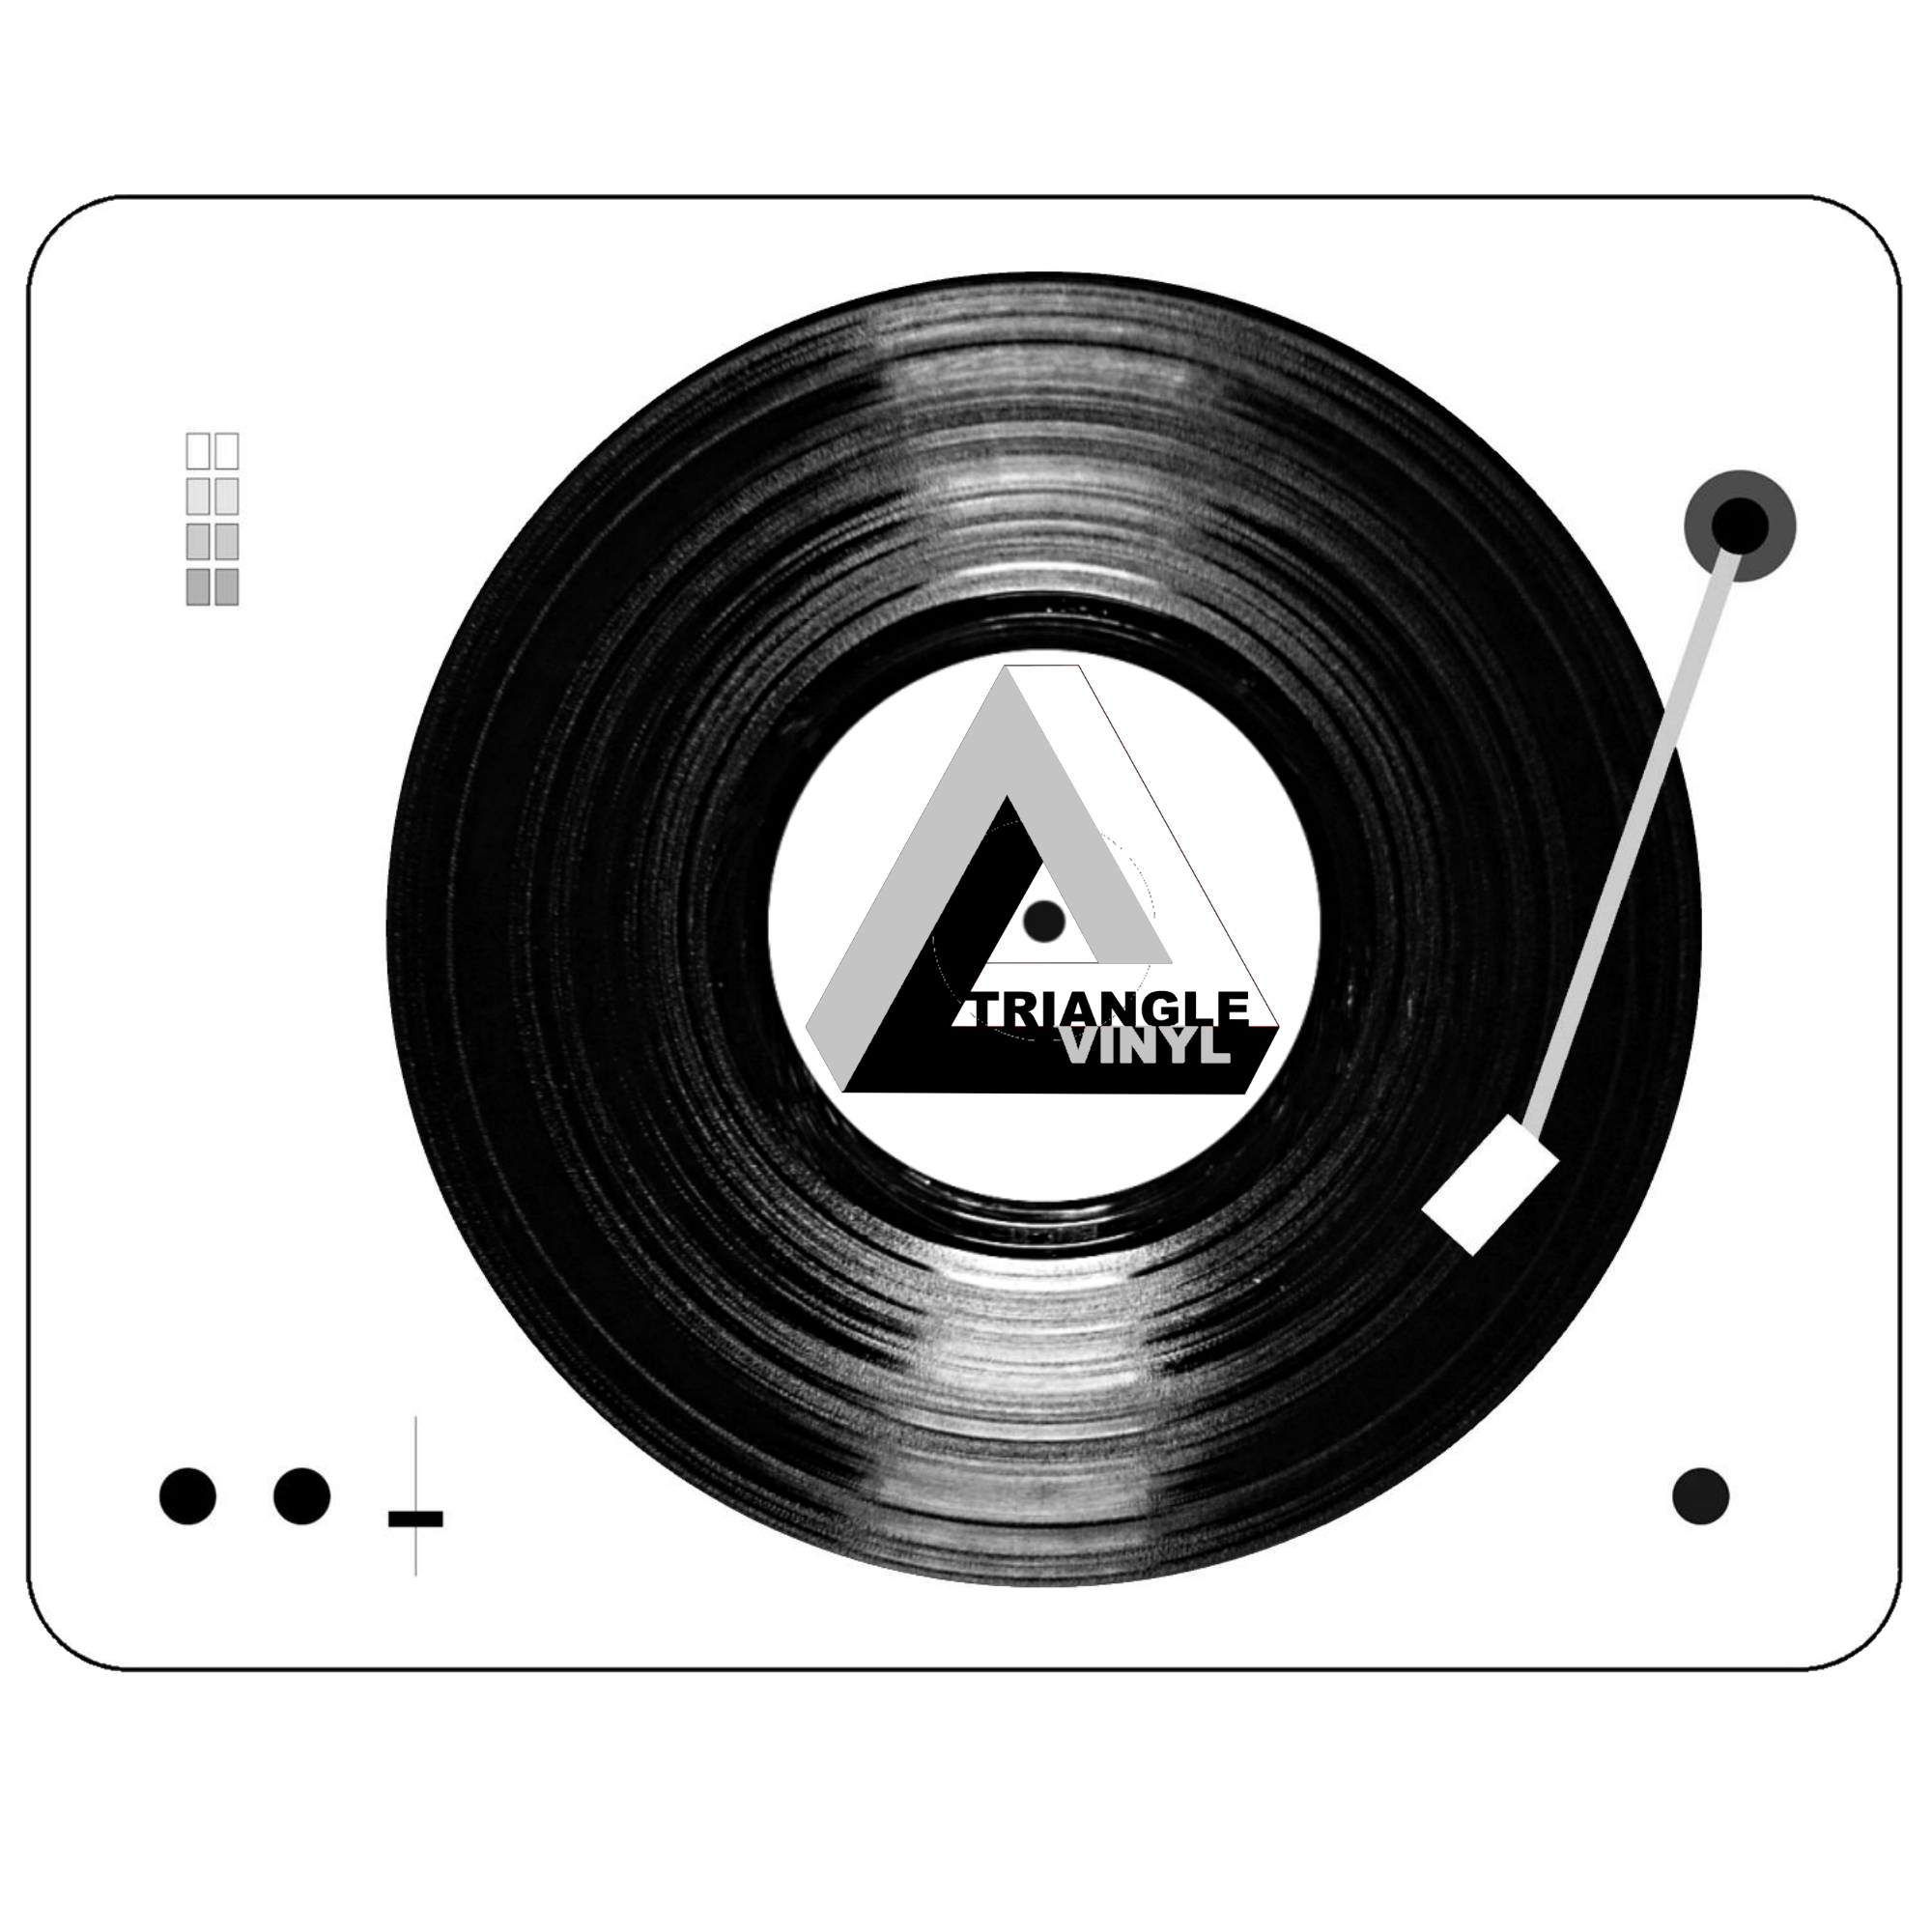 Vinyl Record Player Logo Clemmons, nc record show march 13th!!! mebane 